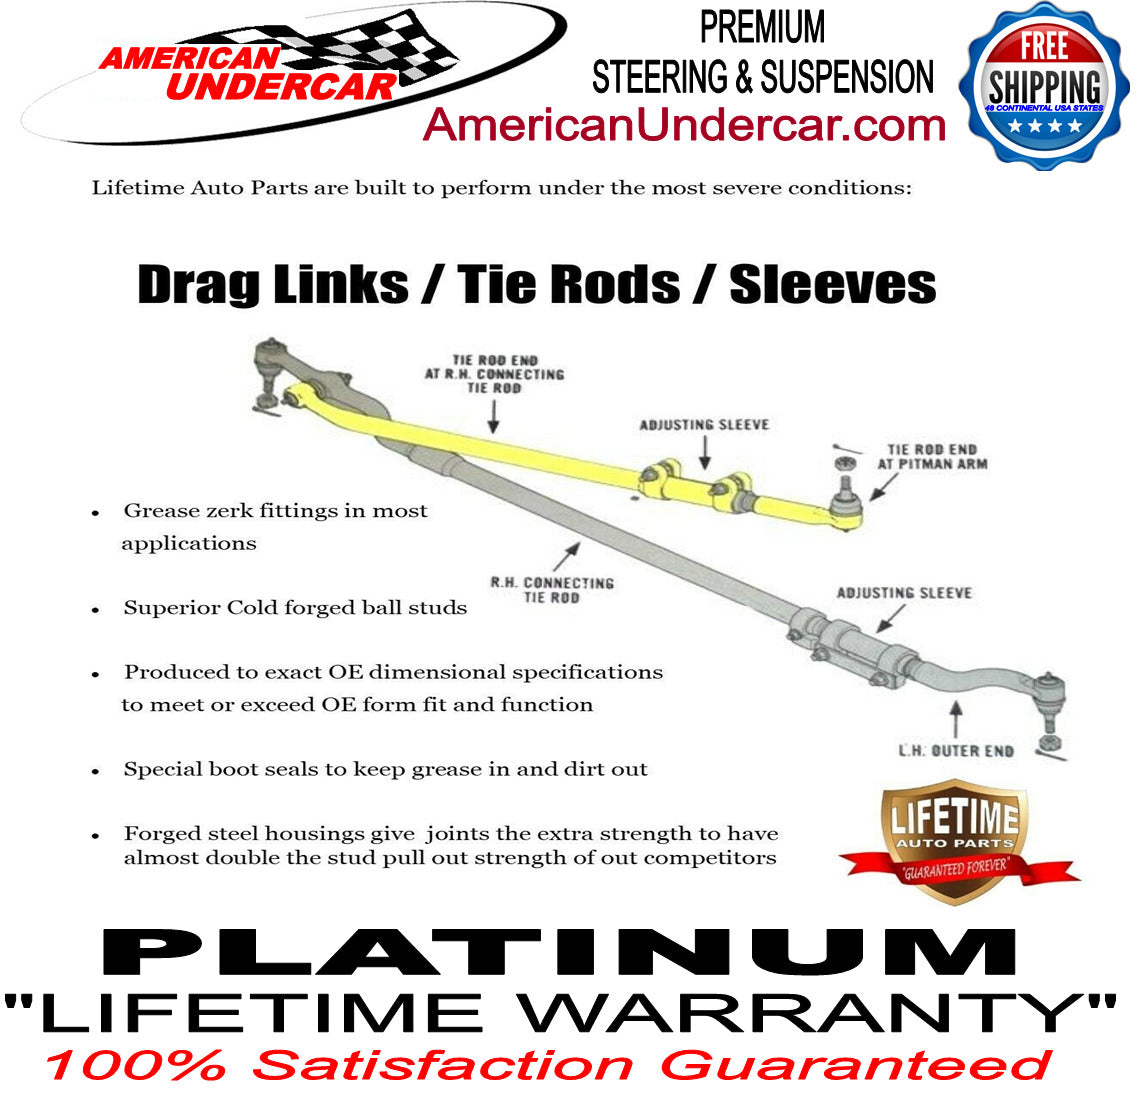 Lifetime Drag Link Tie Rod Steering Kit for 2005-2007 Ford F250, F350 Super Duty 4x4